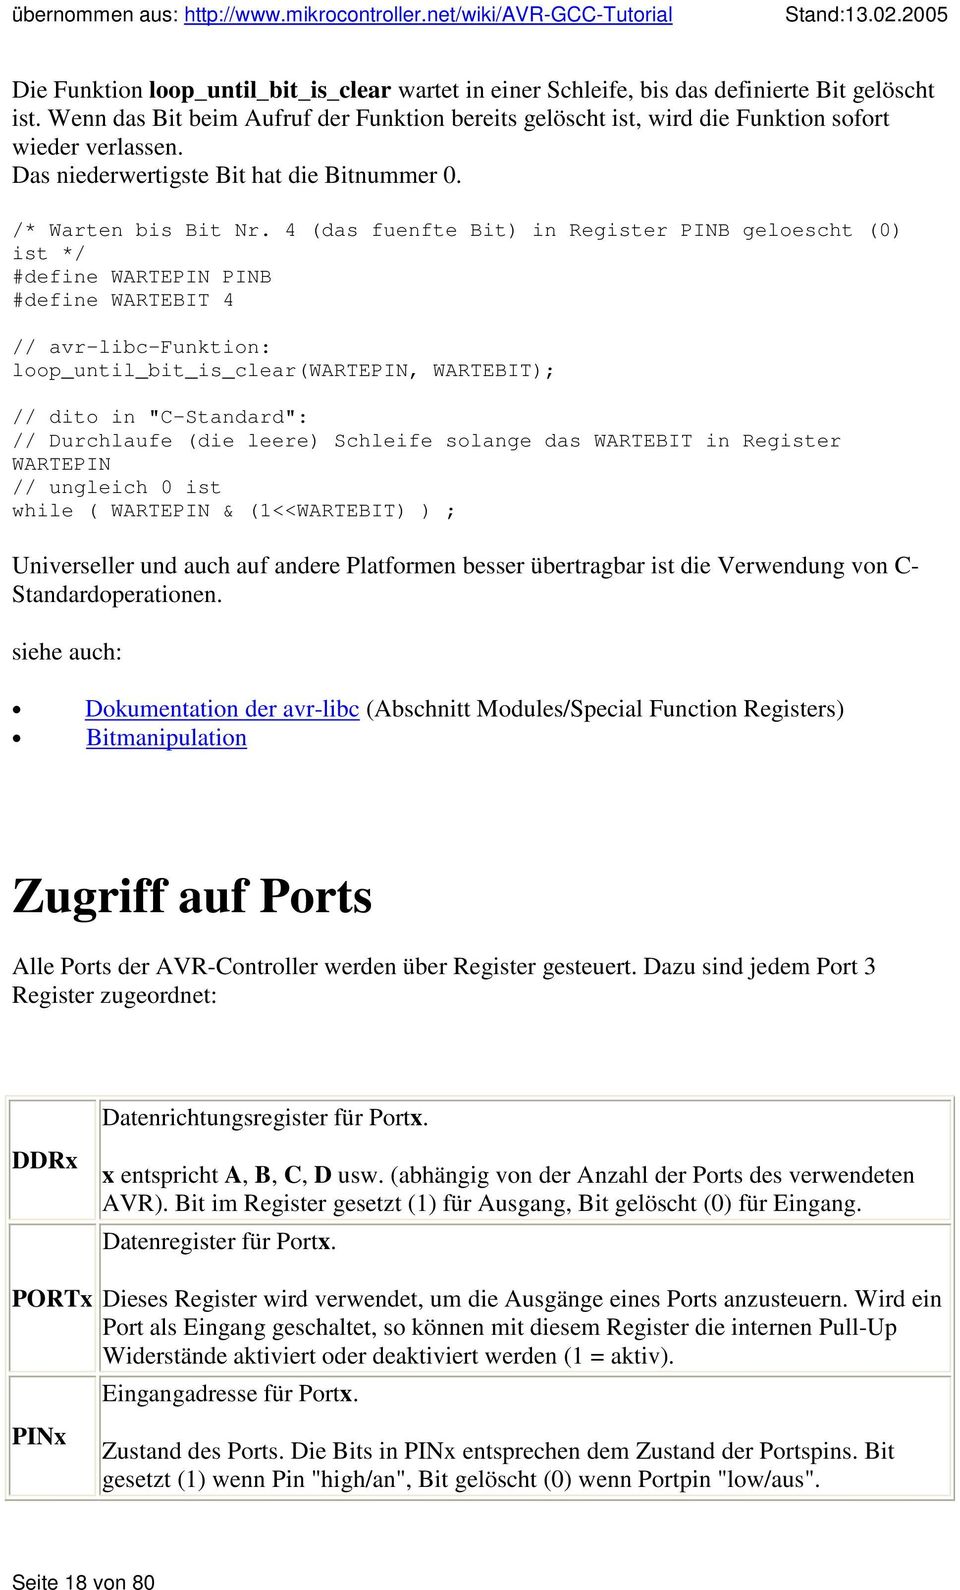 4 (das fuenfte Bit) in Register PINB geloescht (0) ist */ #define WARTEPIN PINB #define WARTEBIT 4 // avr-libc-funktion: loop_until_bit_is_clear(wartepin, WARTEBIT); // dito in "C-Standard": //